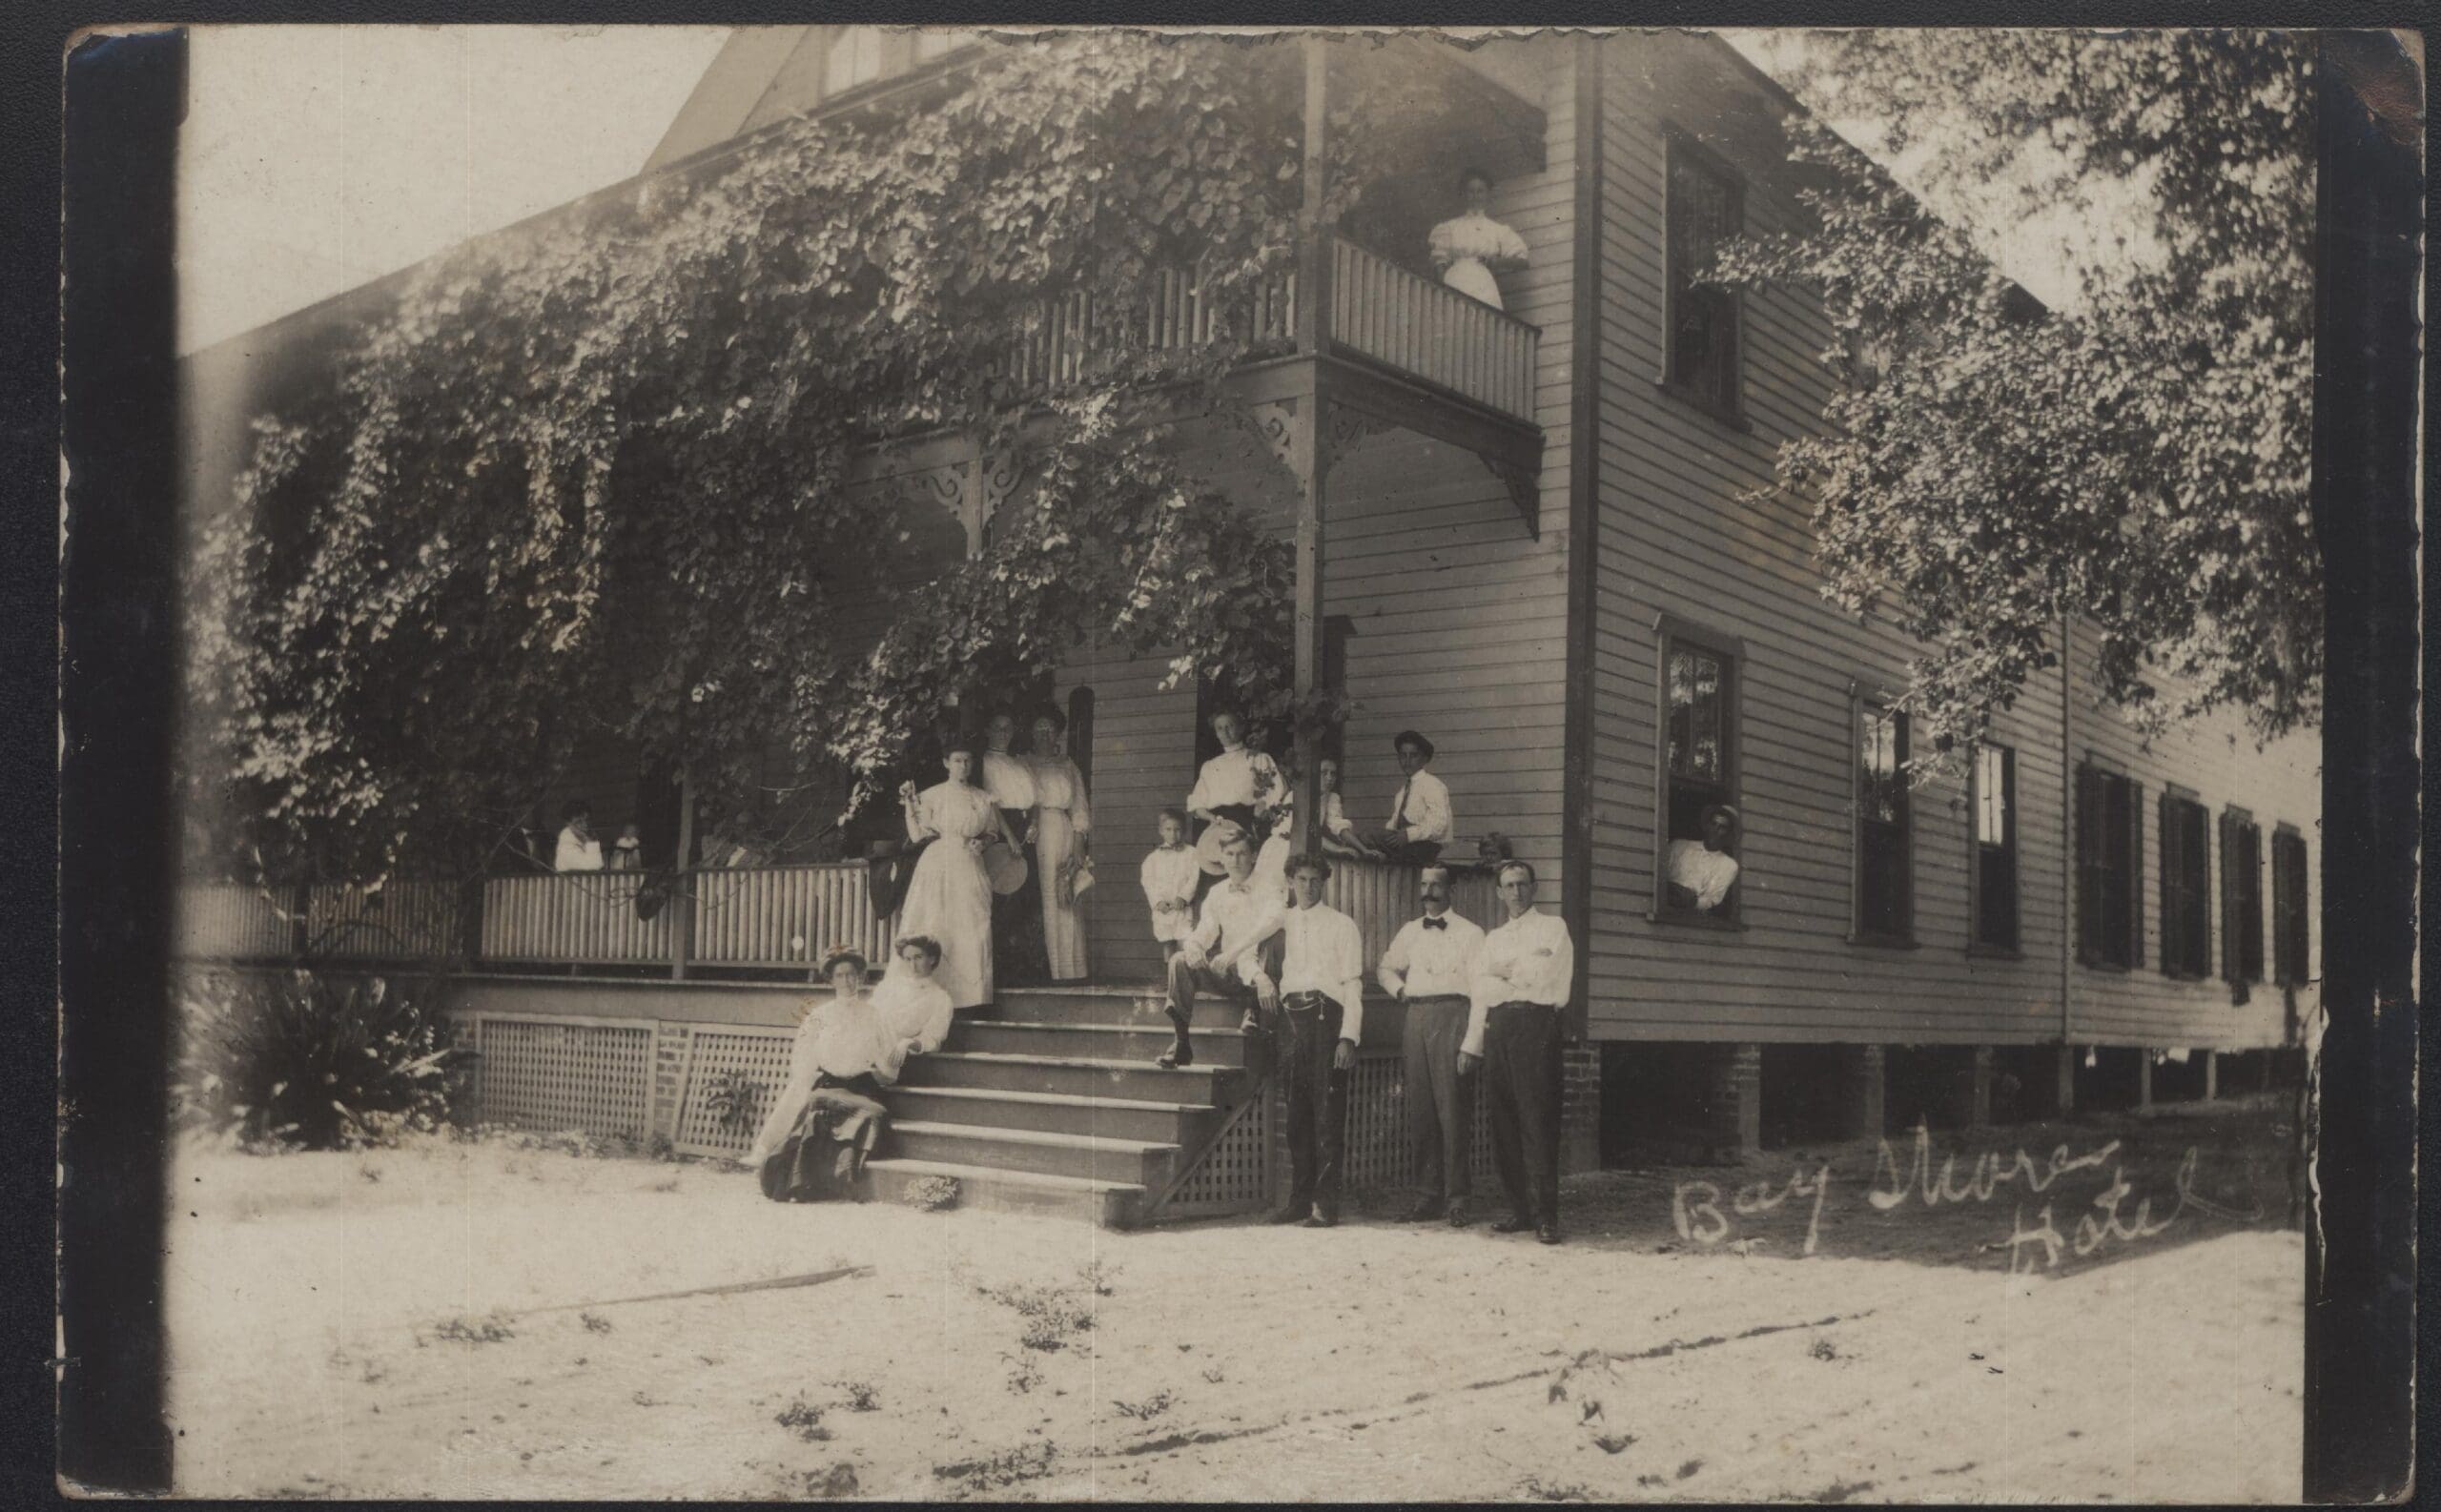 Photograph Postcard, Bayshore Hotel, early 20th century